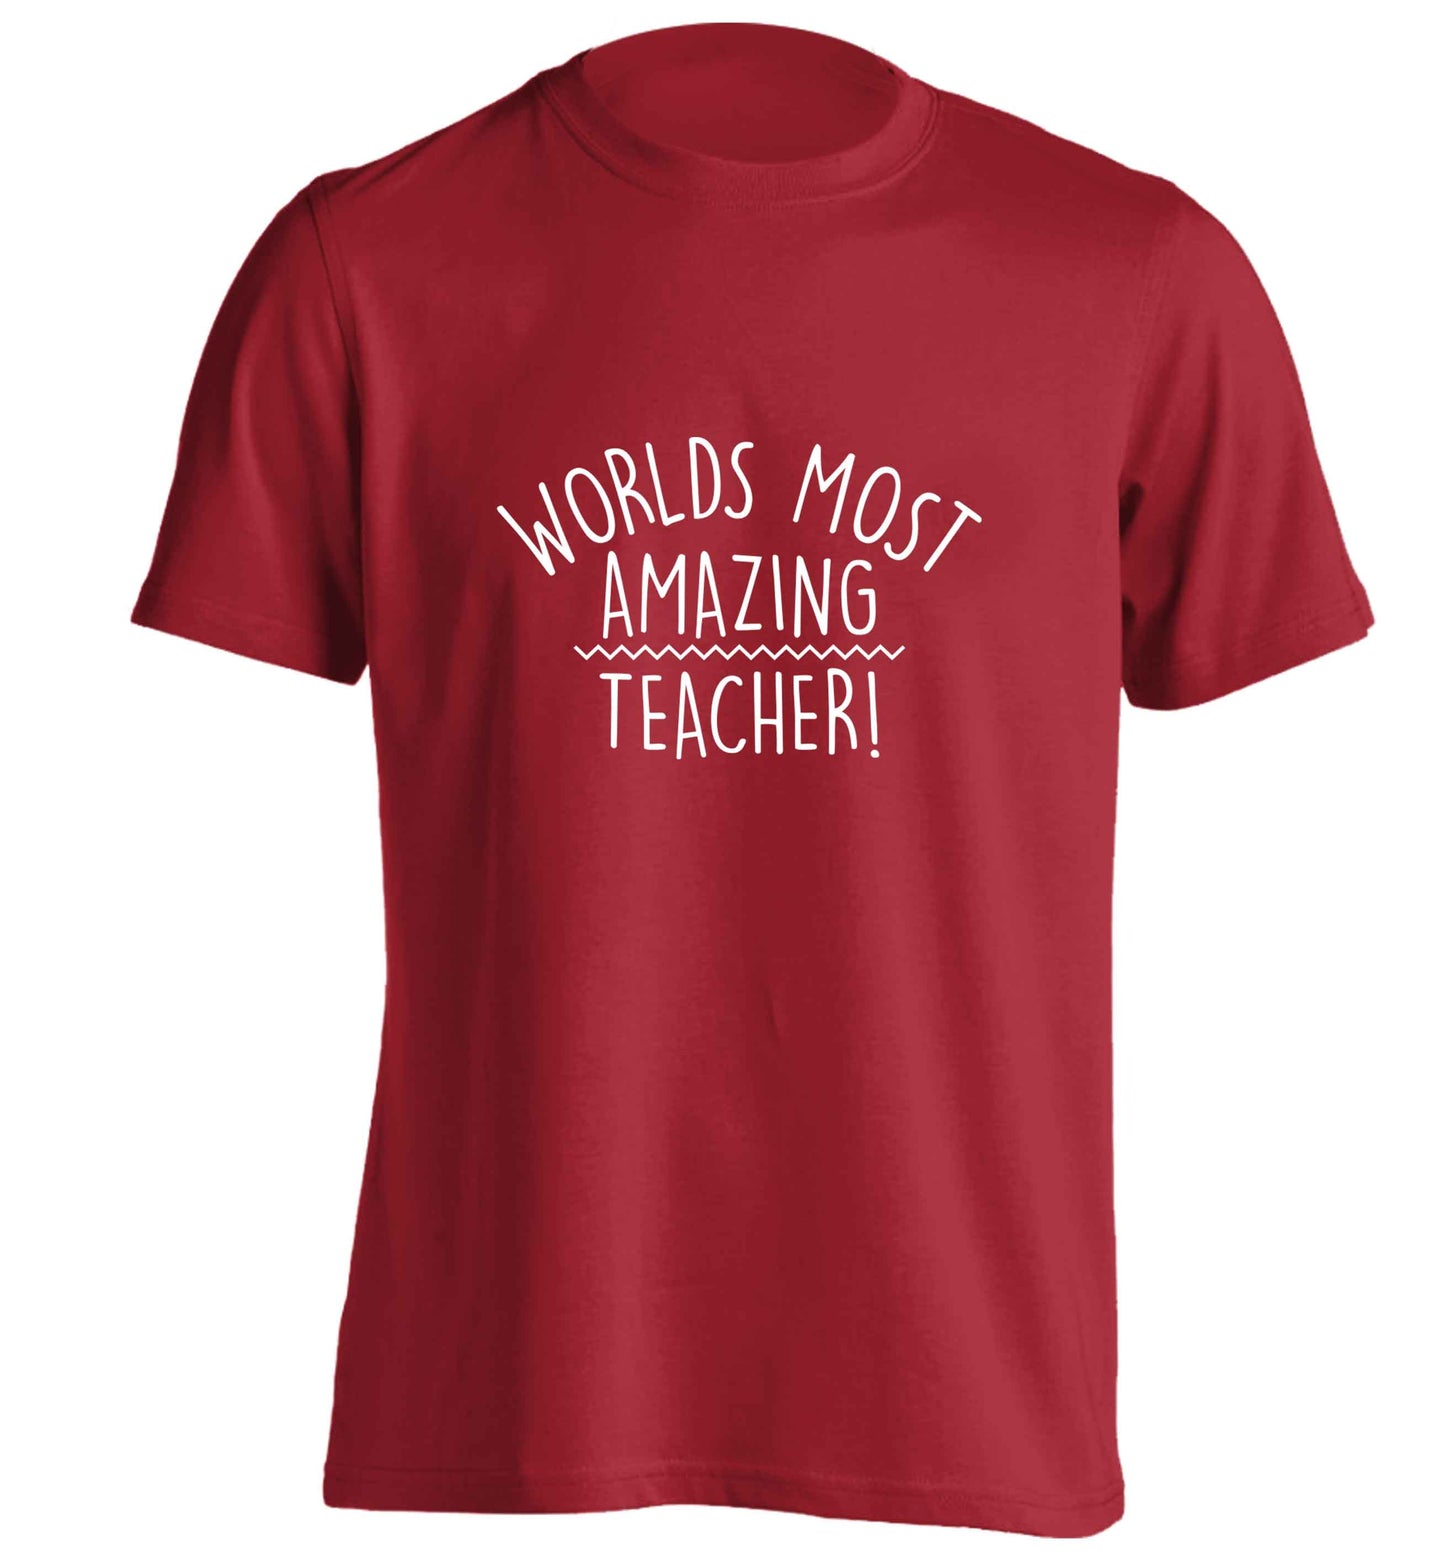 Worlds most amazing teacher adults unisex red Tshirt 2XL